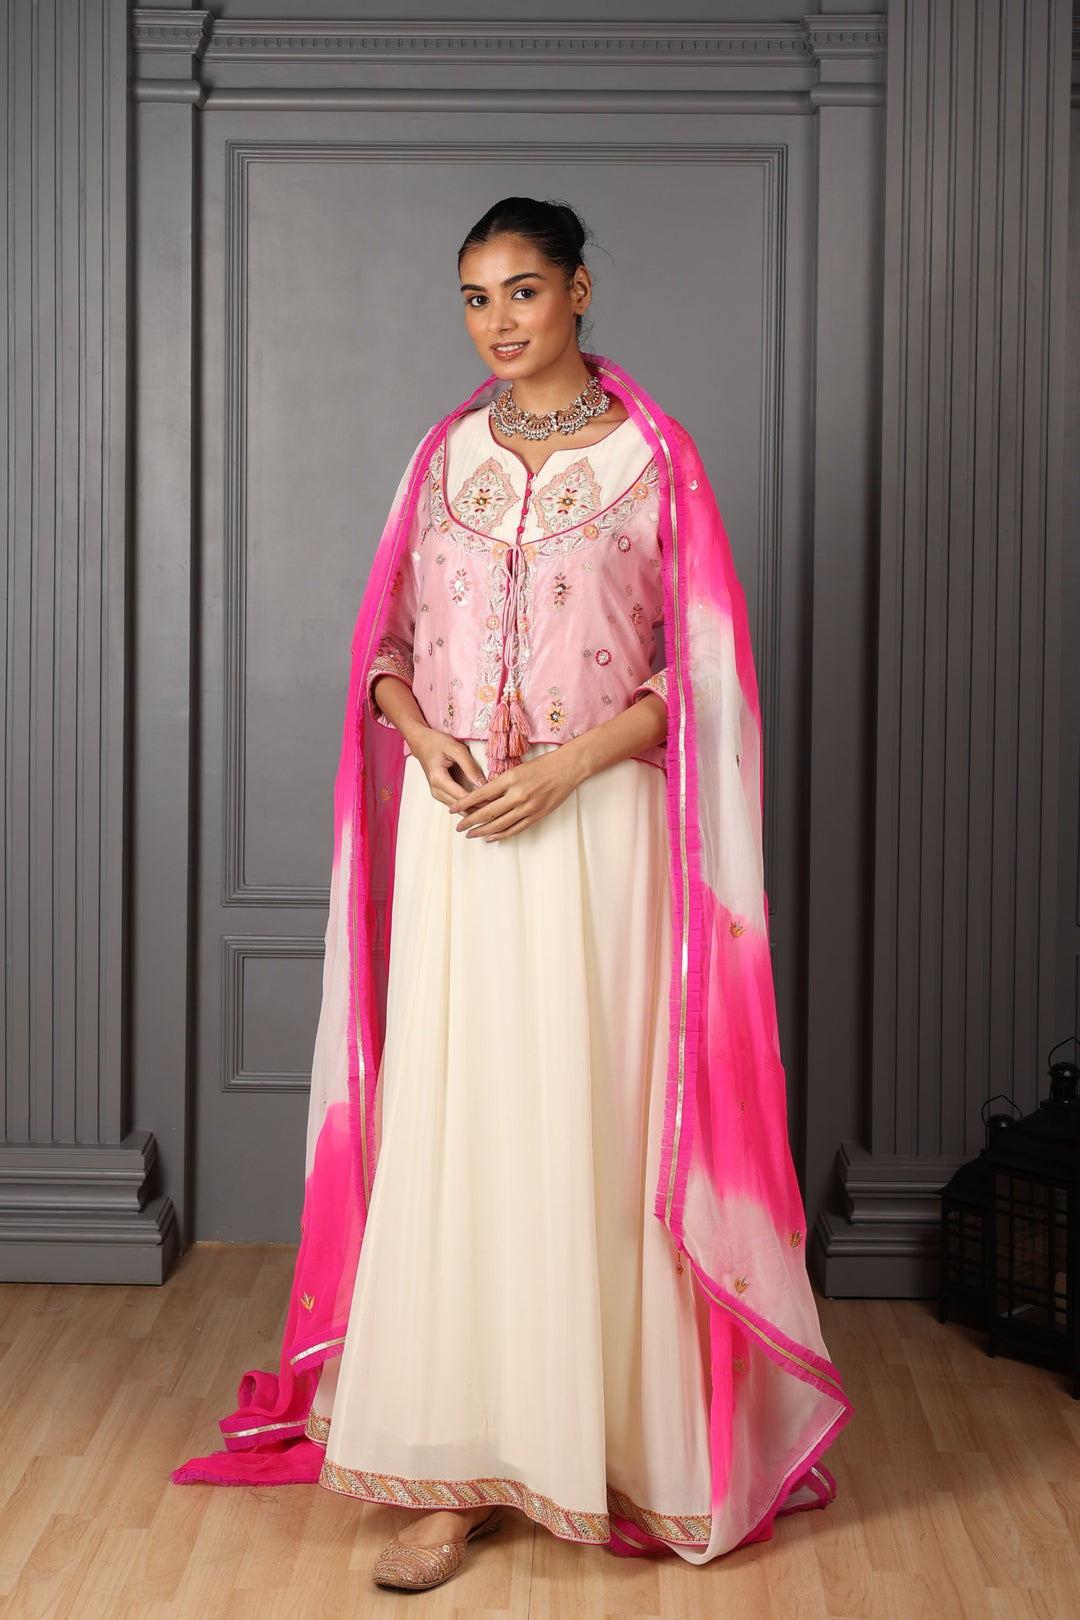 Off-White & Pink Embroidered Anarkali Set